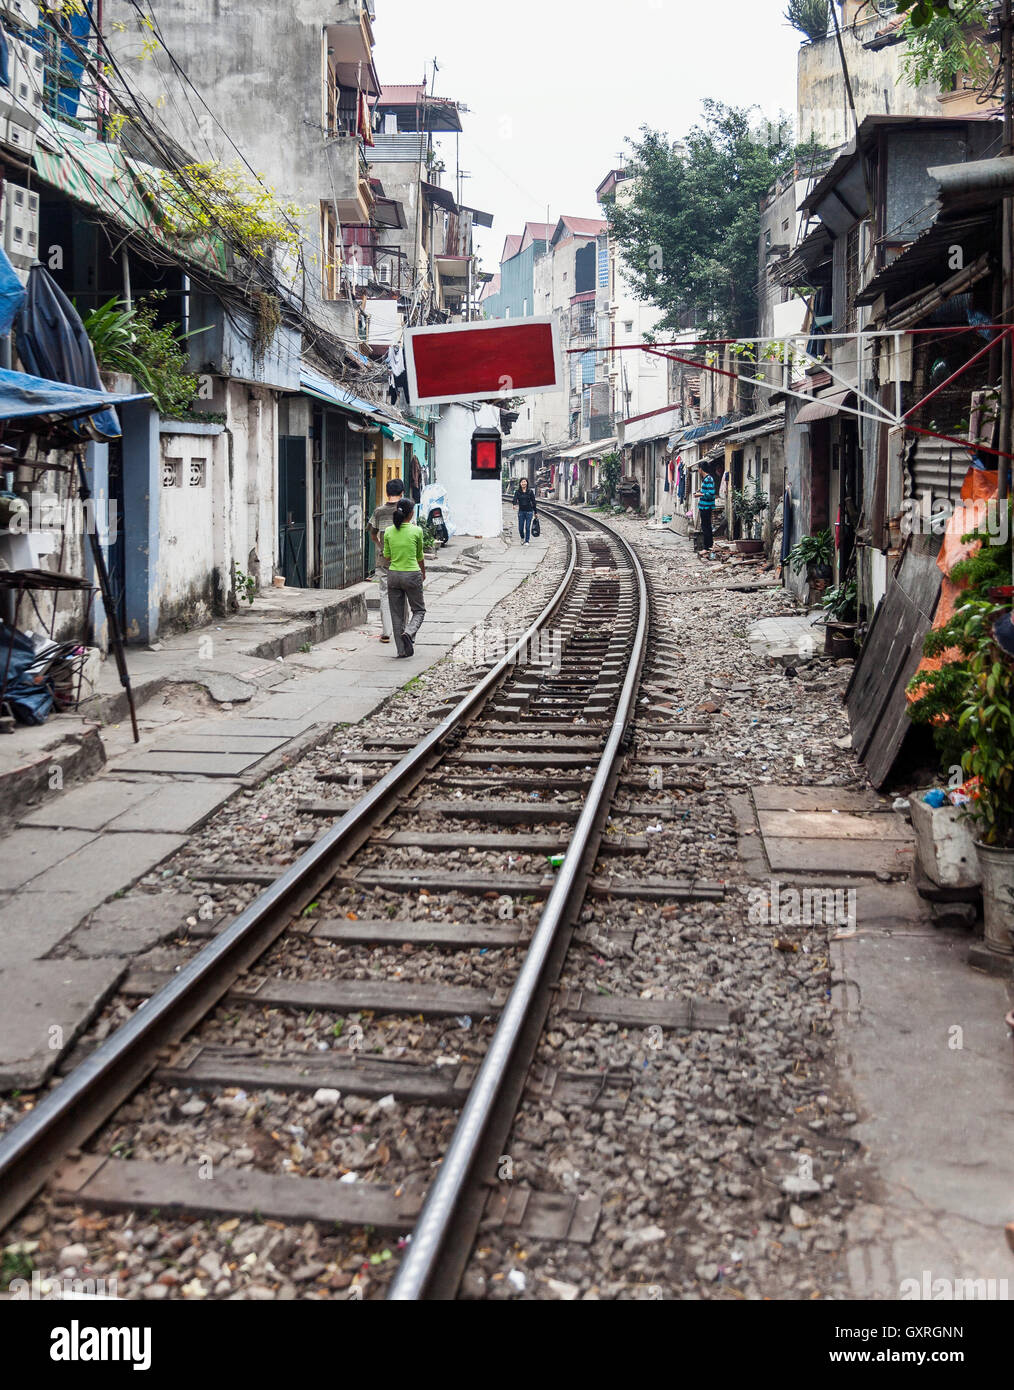 Railroad in Hanoi city, Vietnam Stock Photo